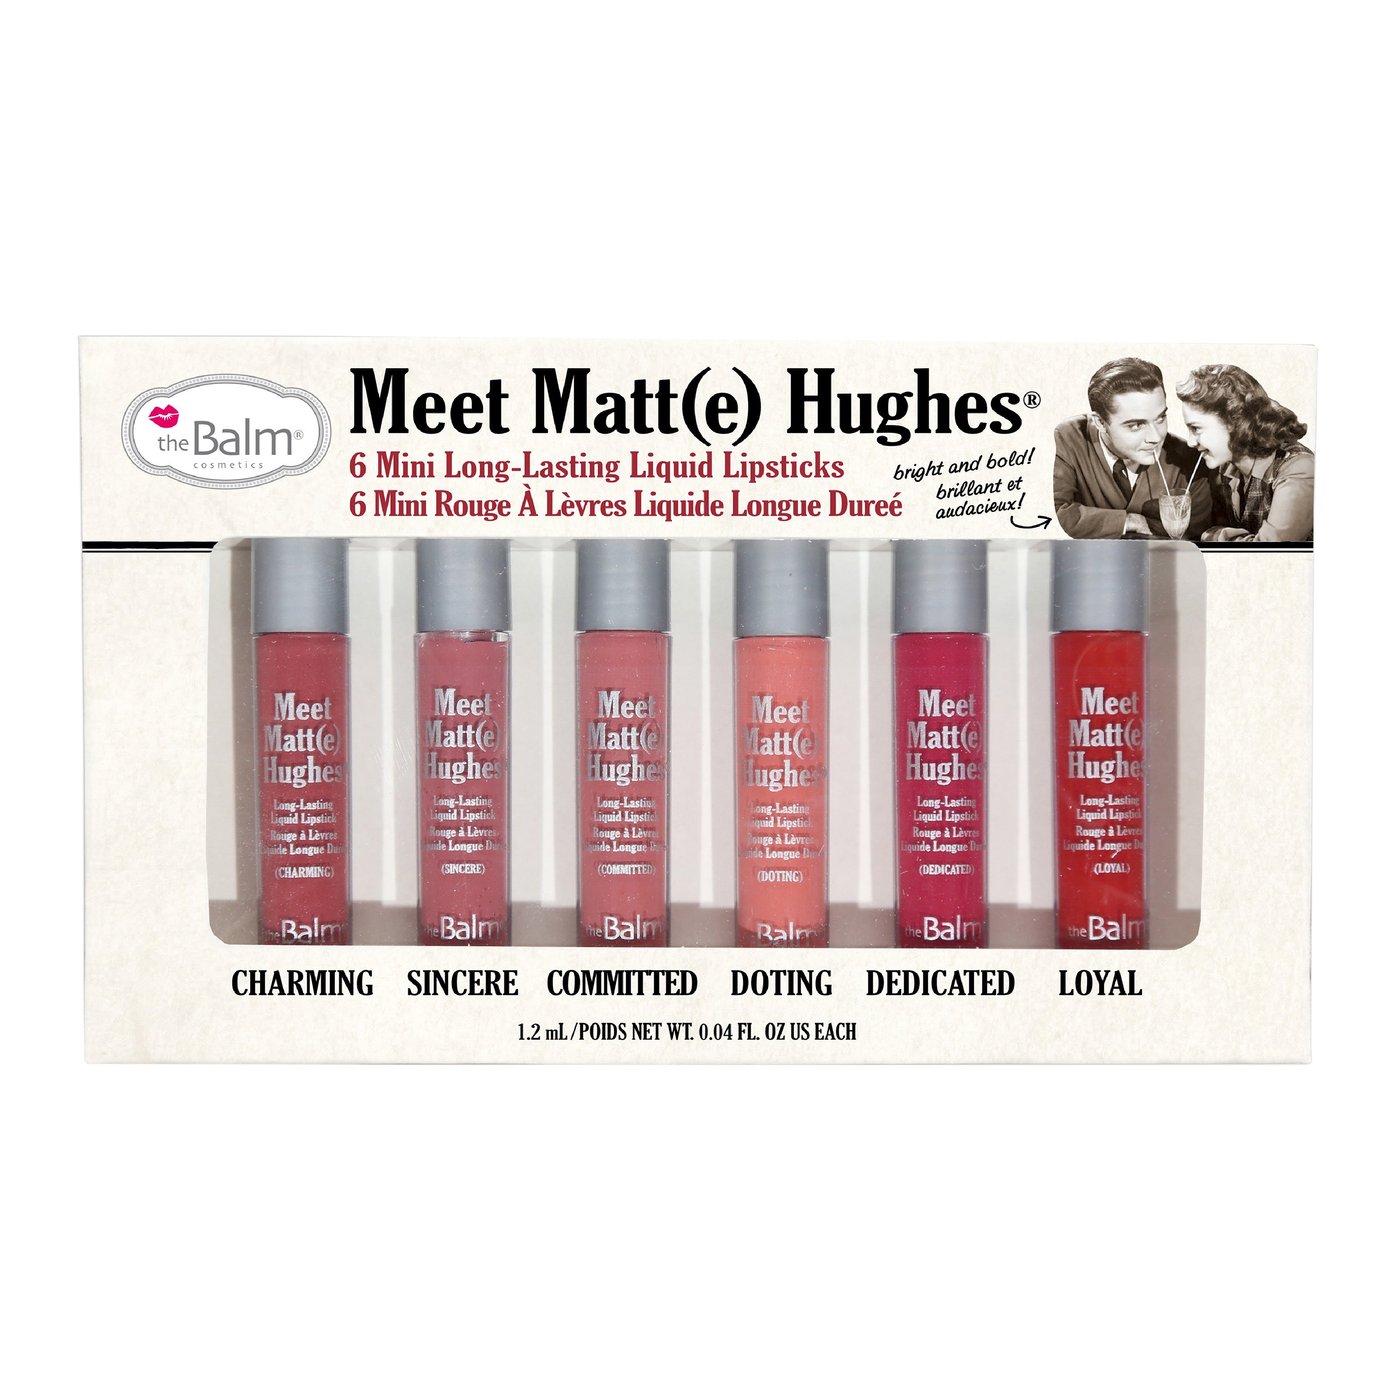 theBalm Cosmetics Meet Matte Hughes Volume 1 Set of 6 Mini Long-Lasting Liquid Lipsticks